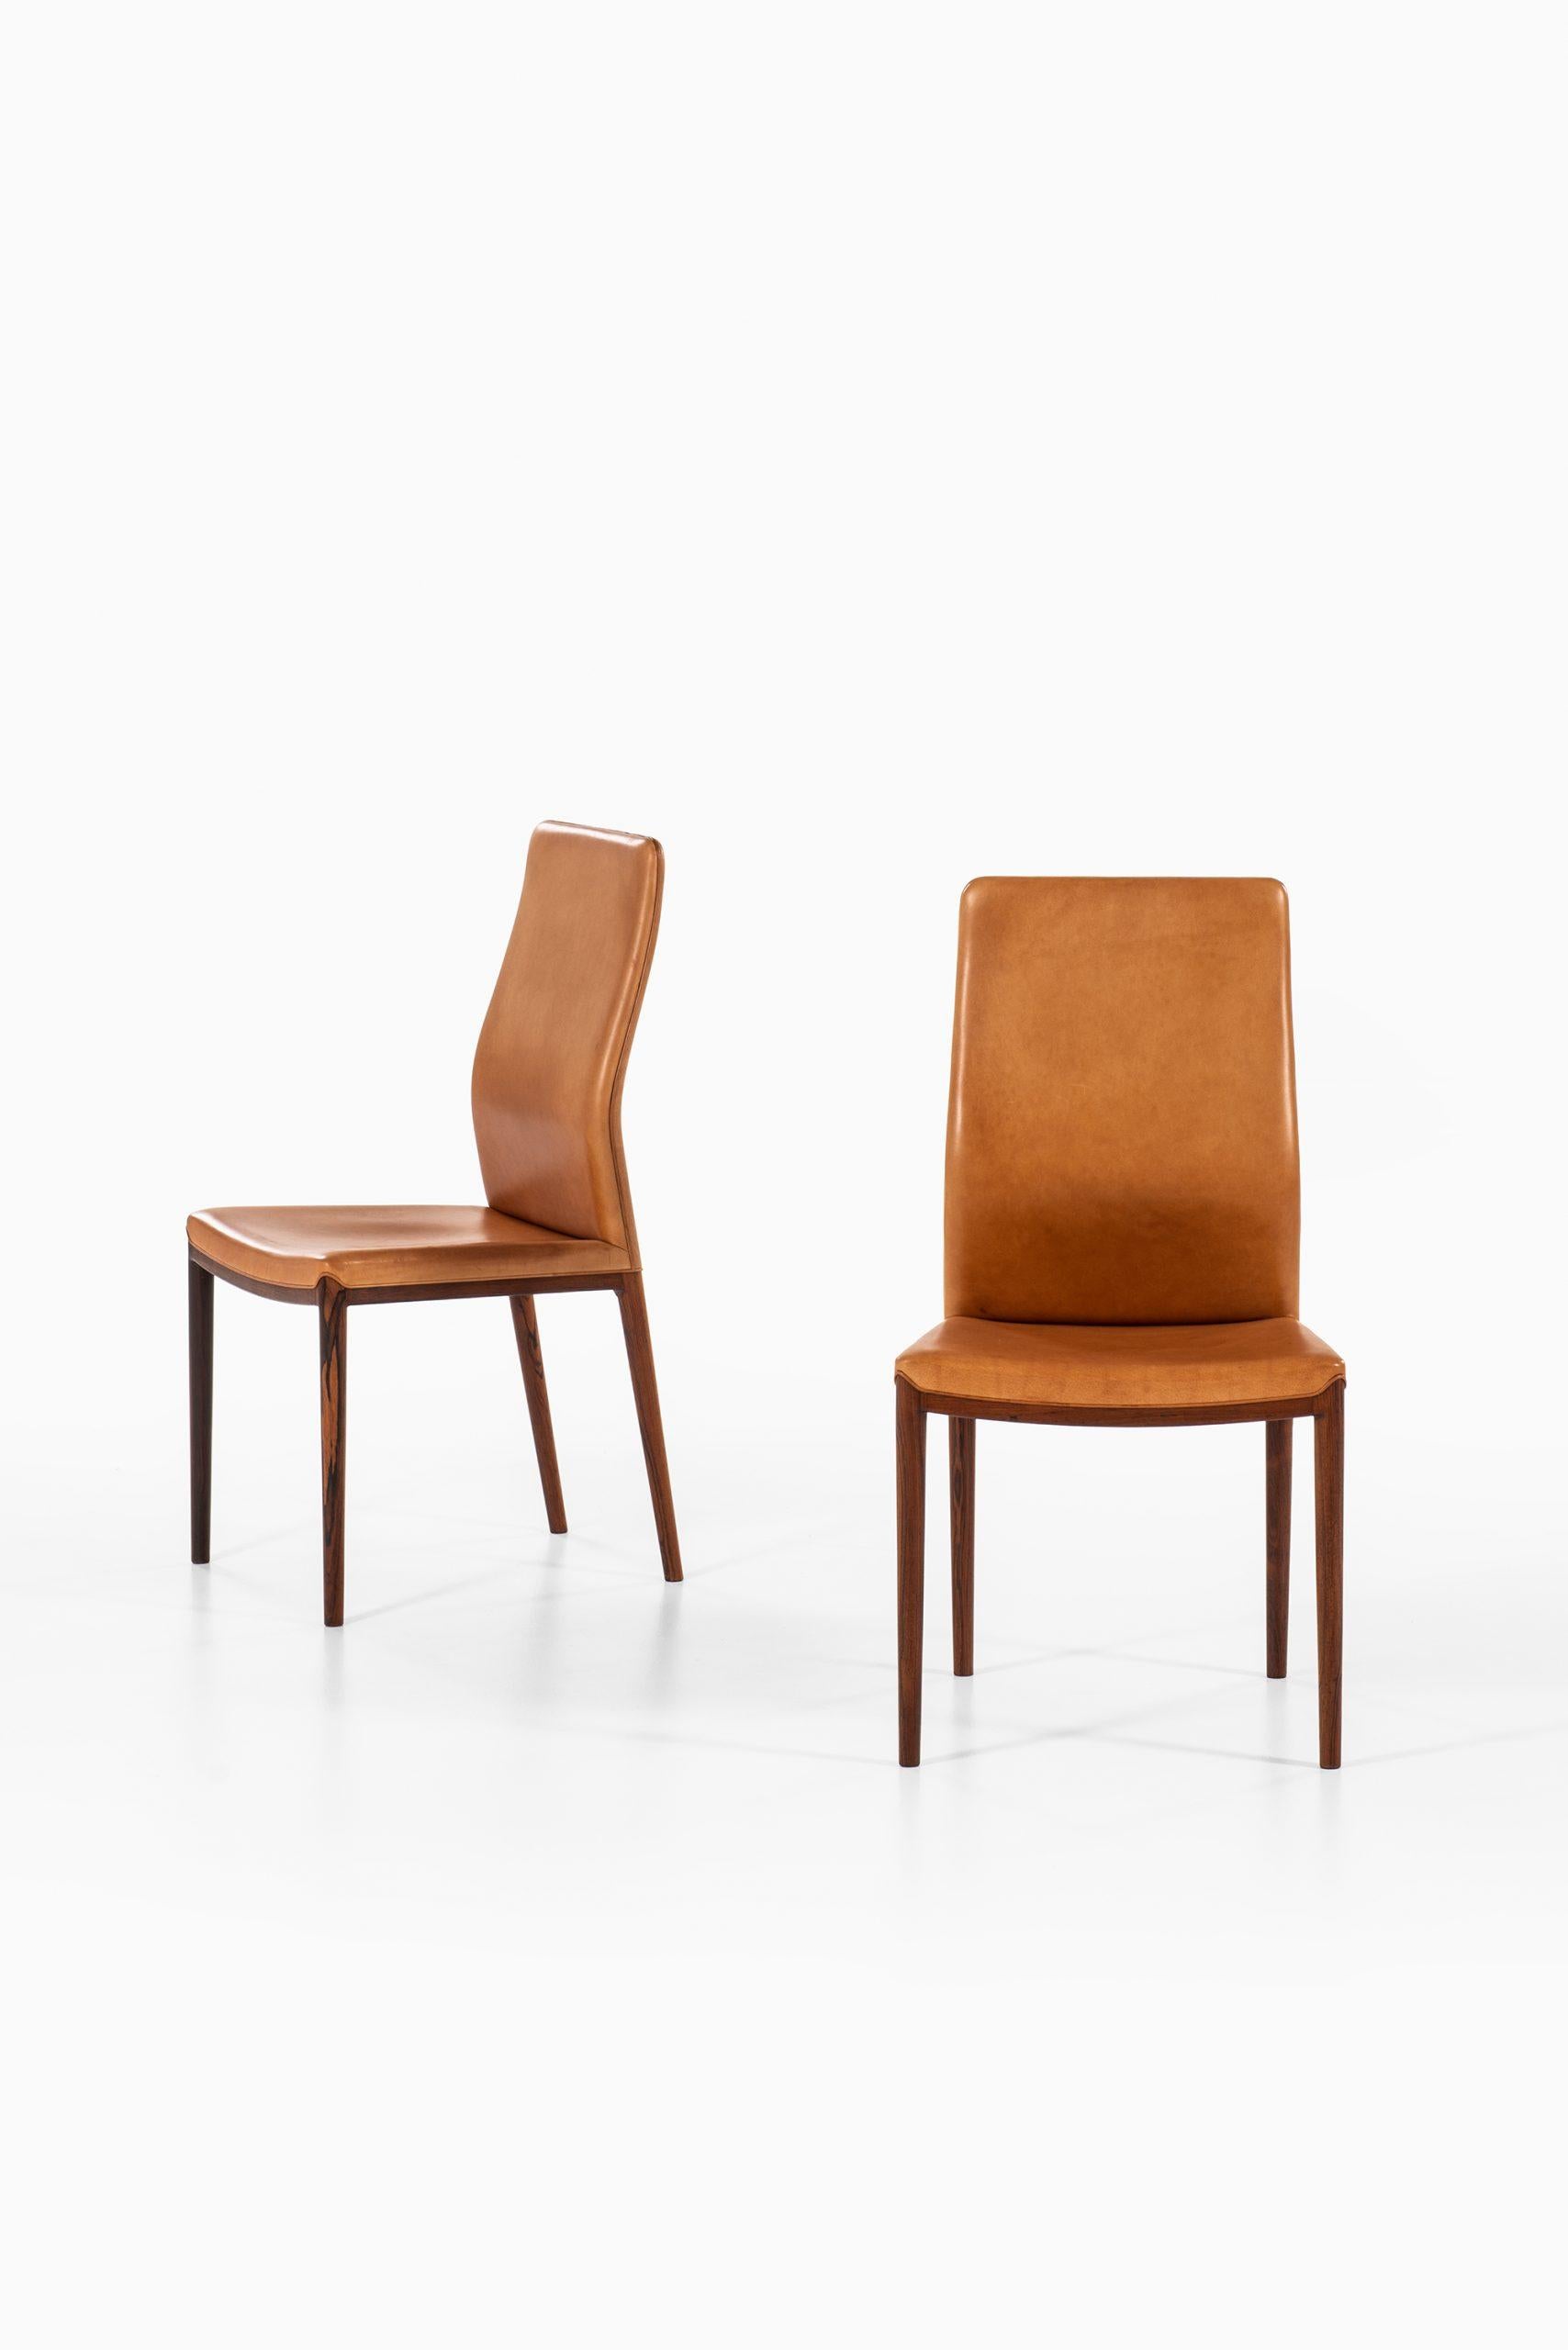 Scandinavian Modern Helge Vestergaard Jensen Dining Chairs Produced by P. Jensen & Co. Cabinetmakers For Sale